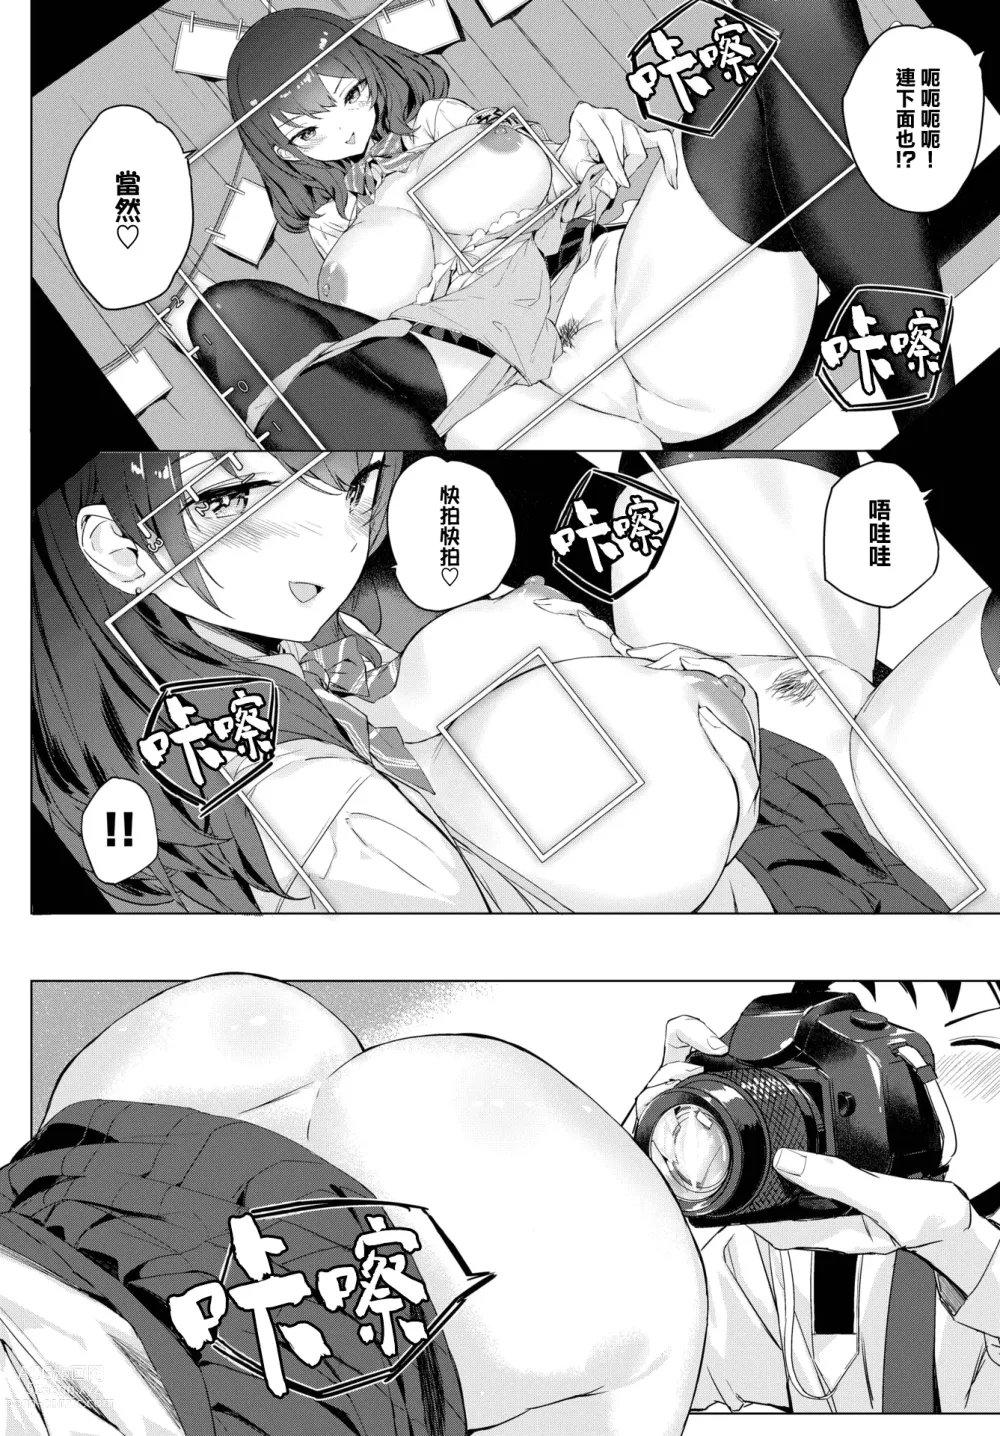 Page 9 of manga Senpai no Big News